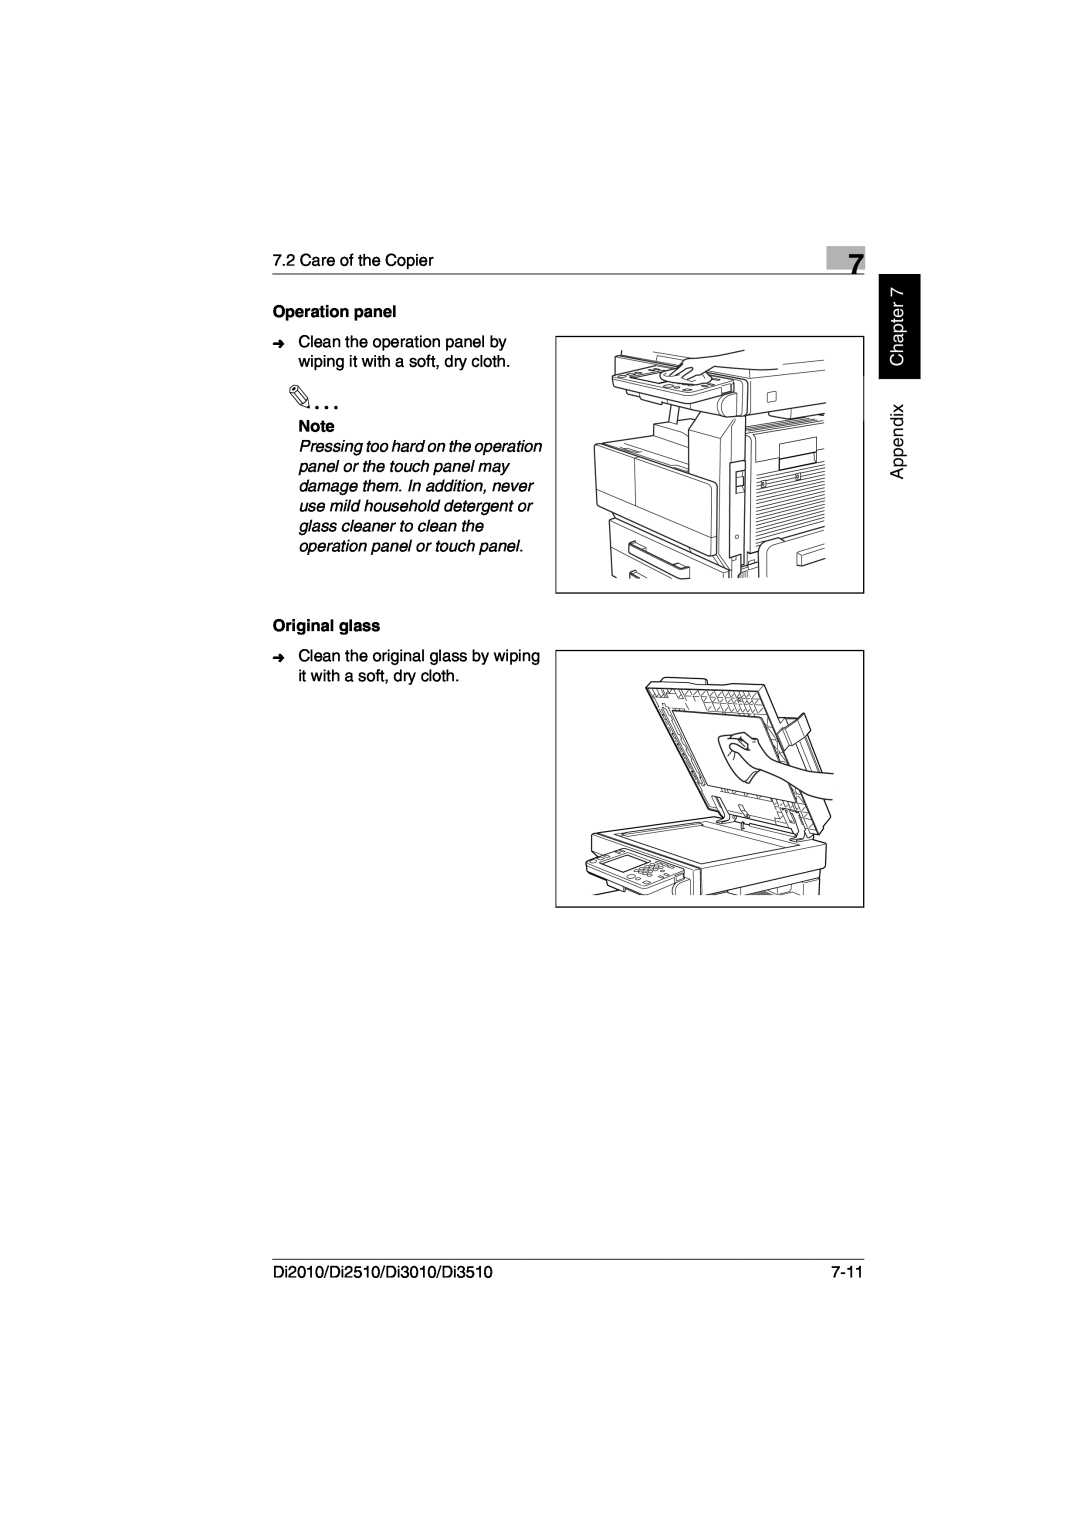 Minolta DI2510, DI2010, DI3010, Di3510 user manual Appendix Chapter 